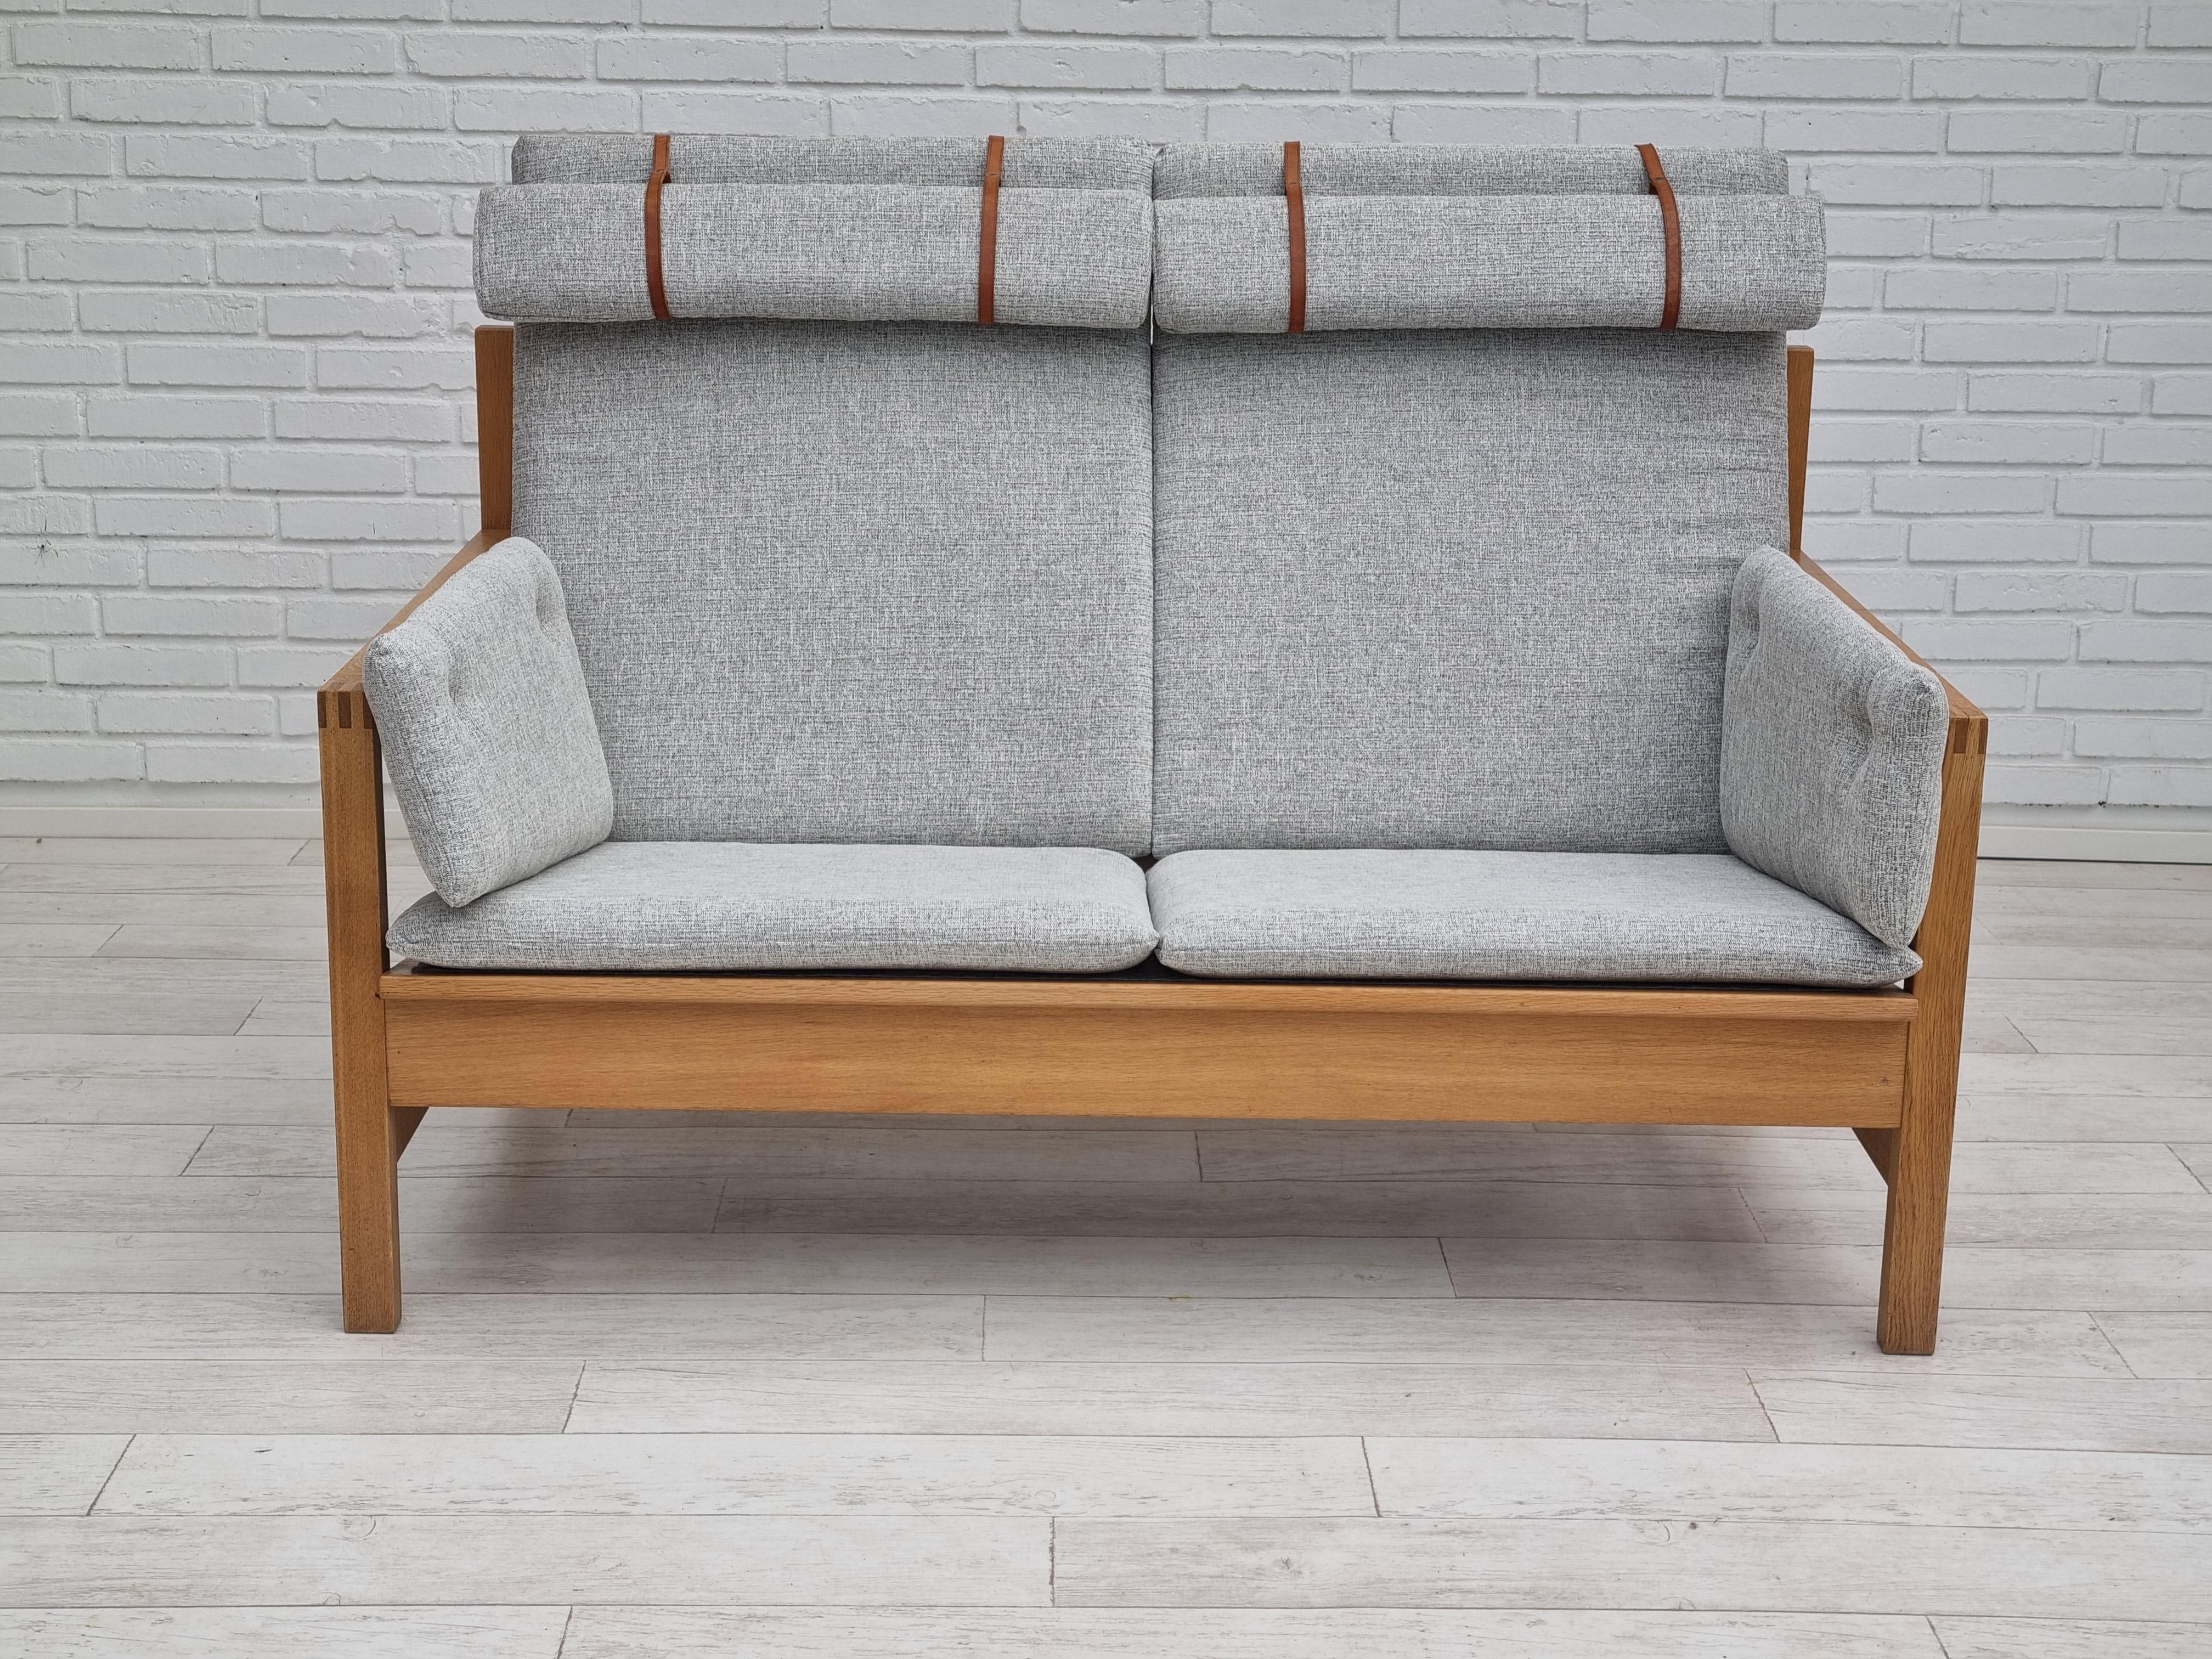 Late 20th Century 70s, Danish design by Børge Mogensen, 2 seater sofa, model 2252, oak wood